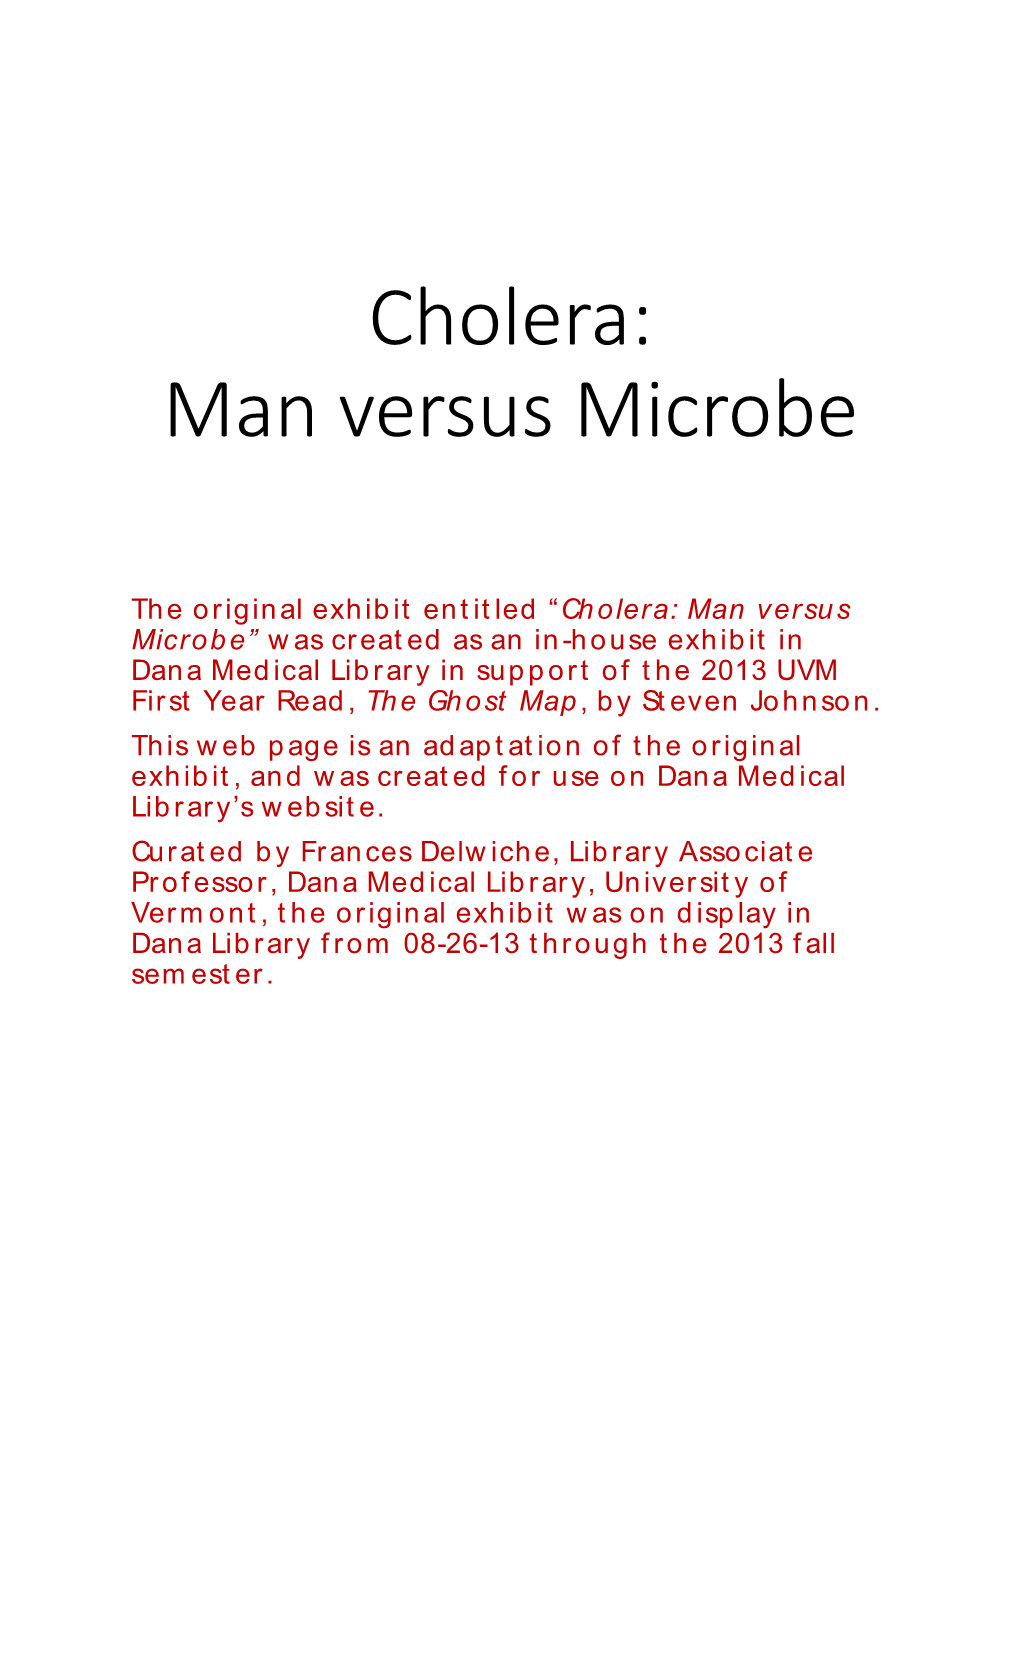 Cholera: Man Versus Microbe